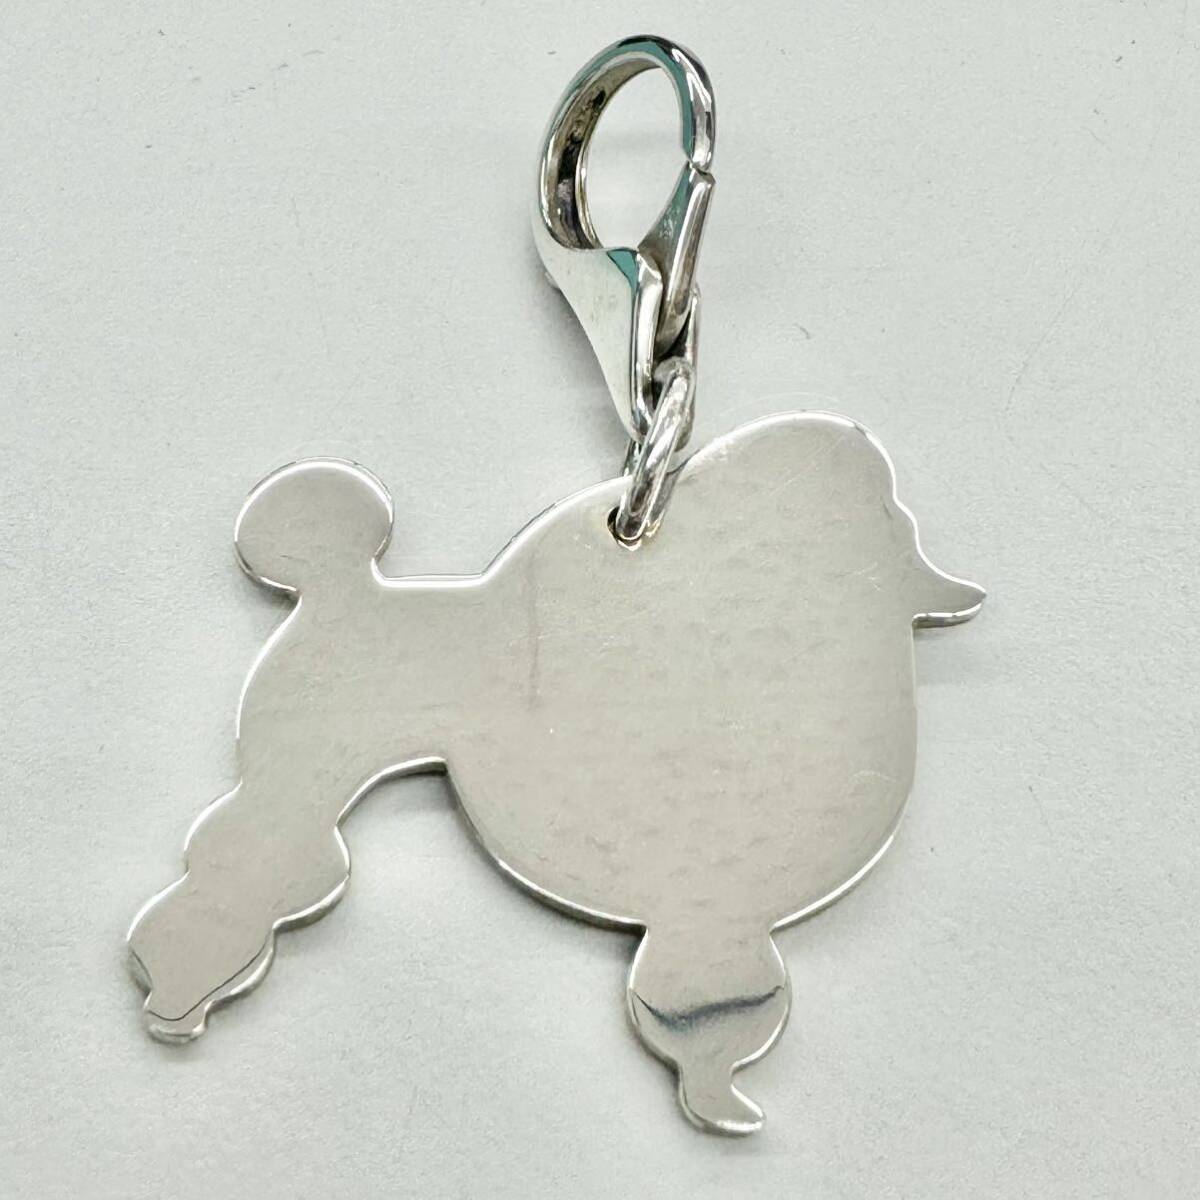 TIFFANY&Co. Tiffany animal key holder charm 925 stamp silver box * storage bag attached 